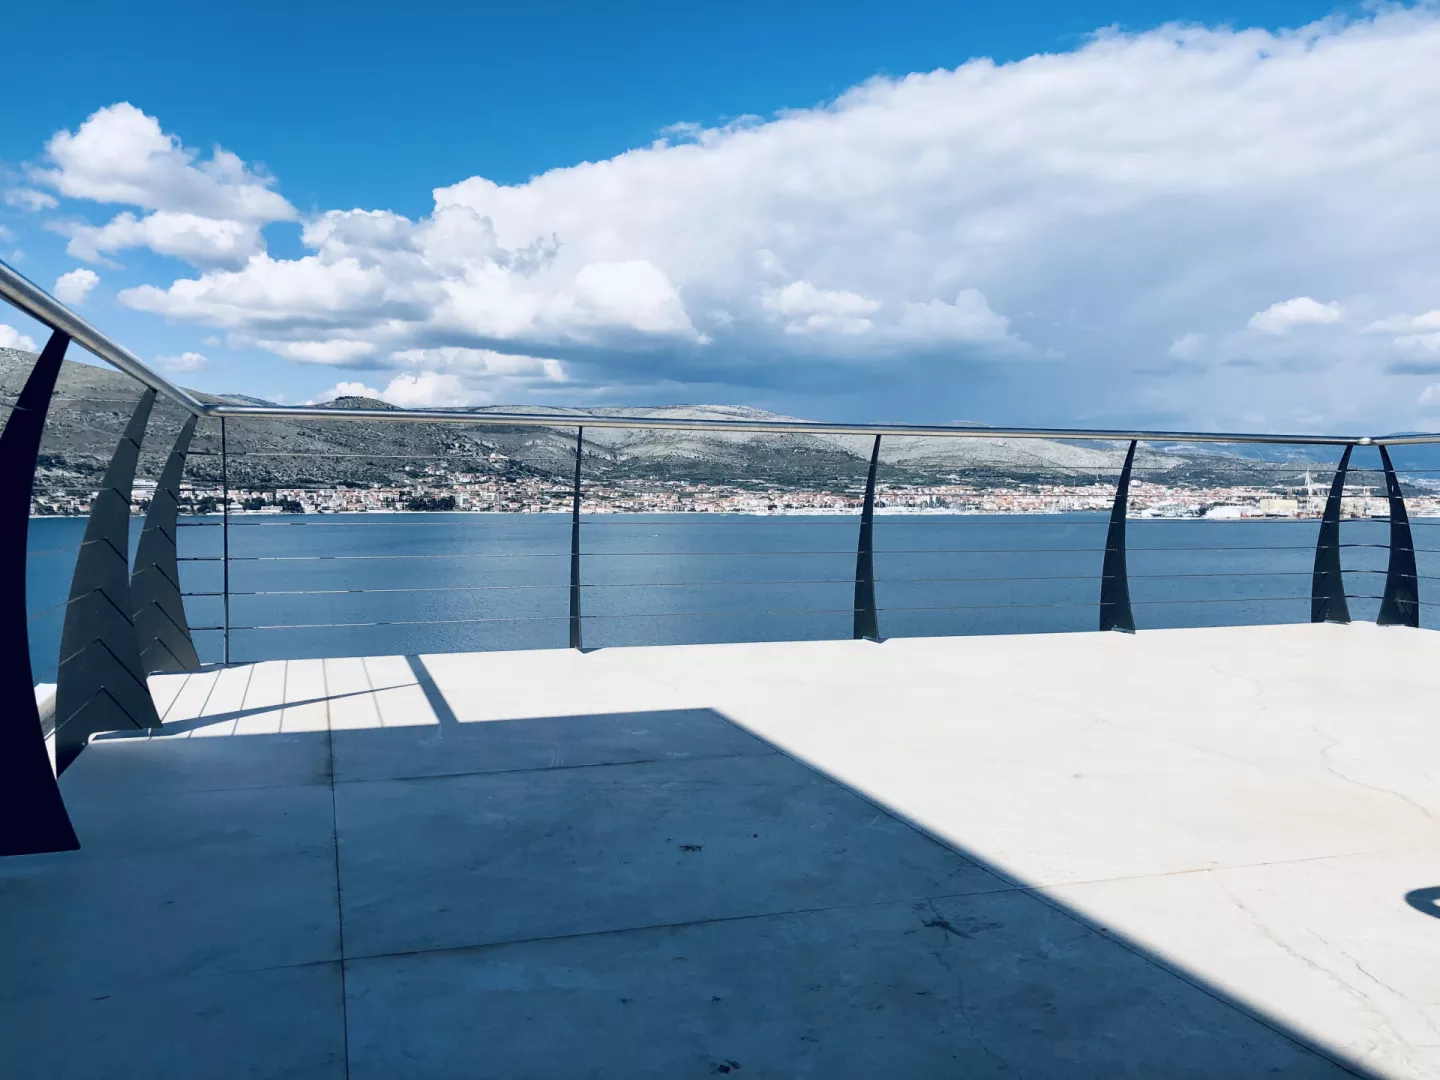 Croatia Trogir luxury villa with pool for sale